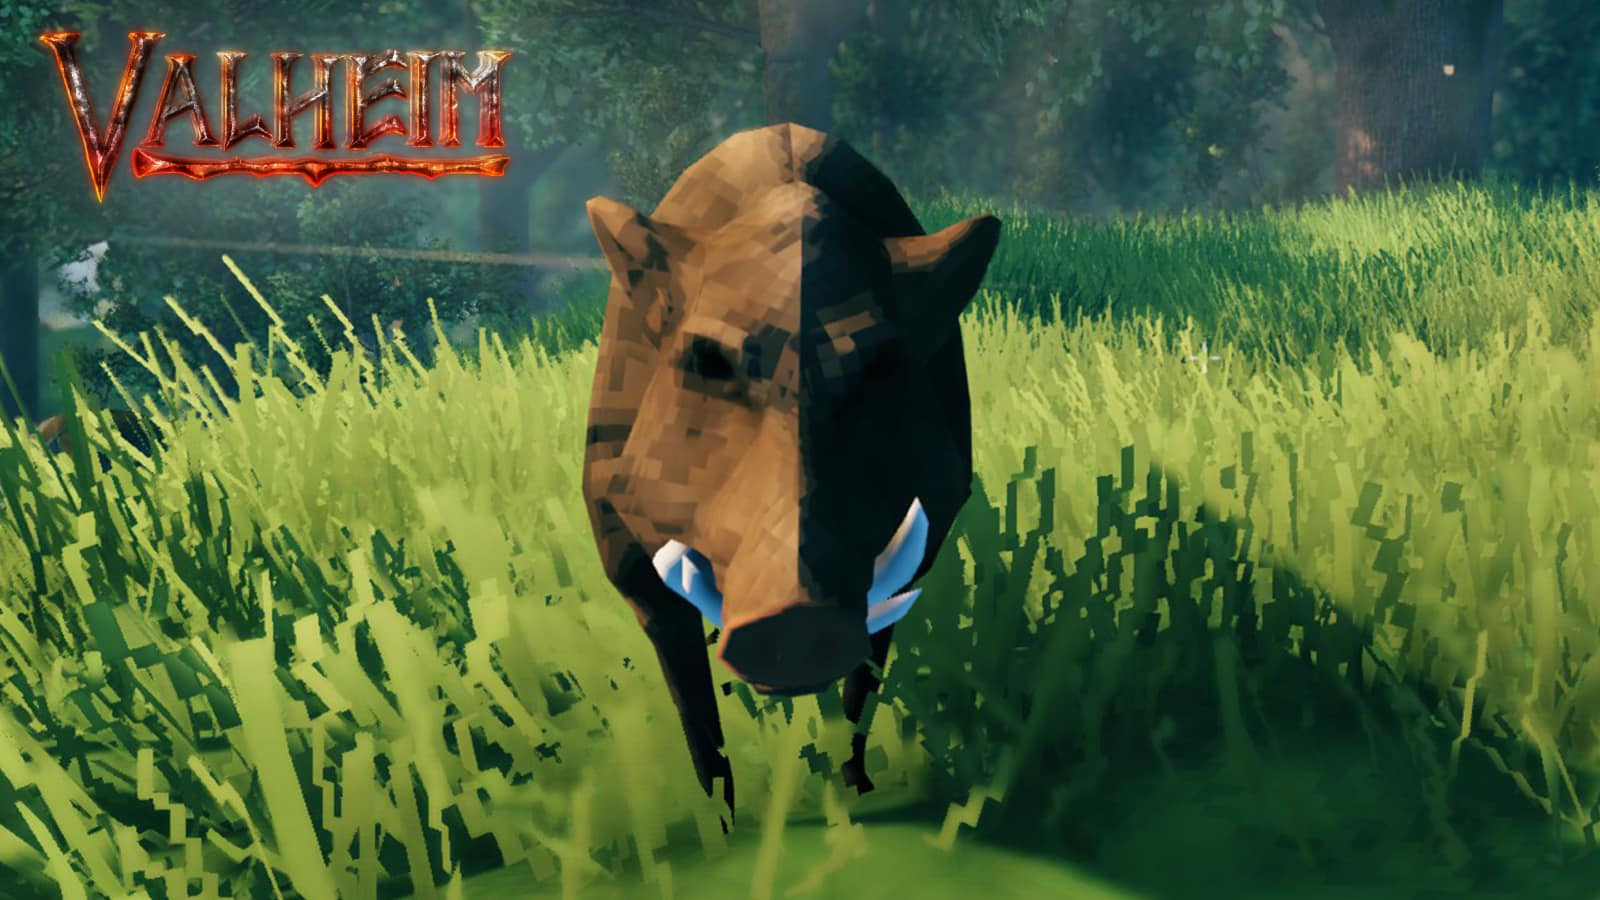 valheim boar in a green field looking at camera